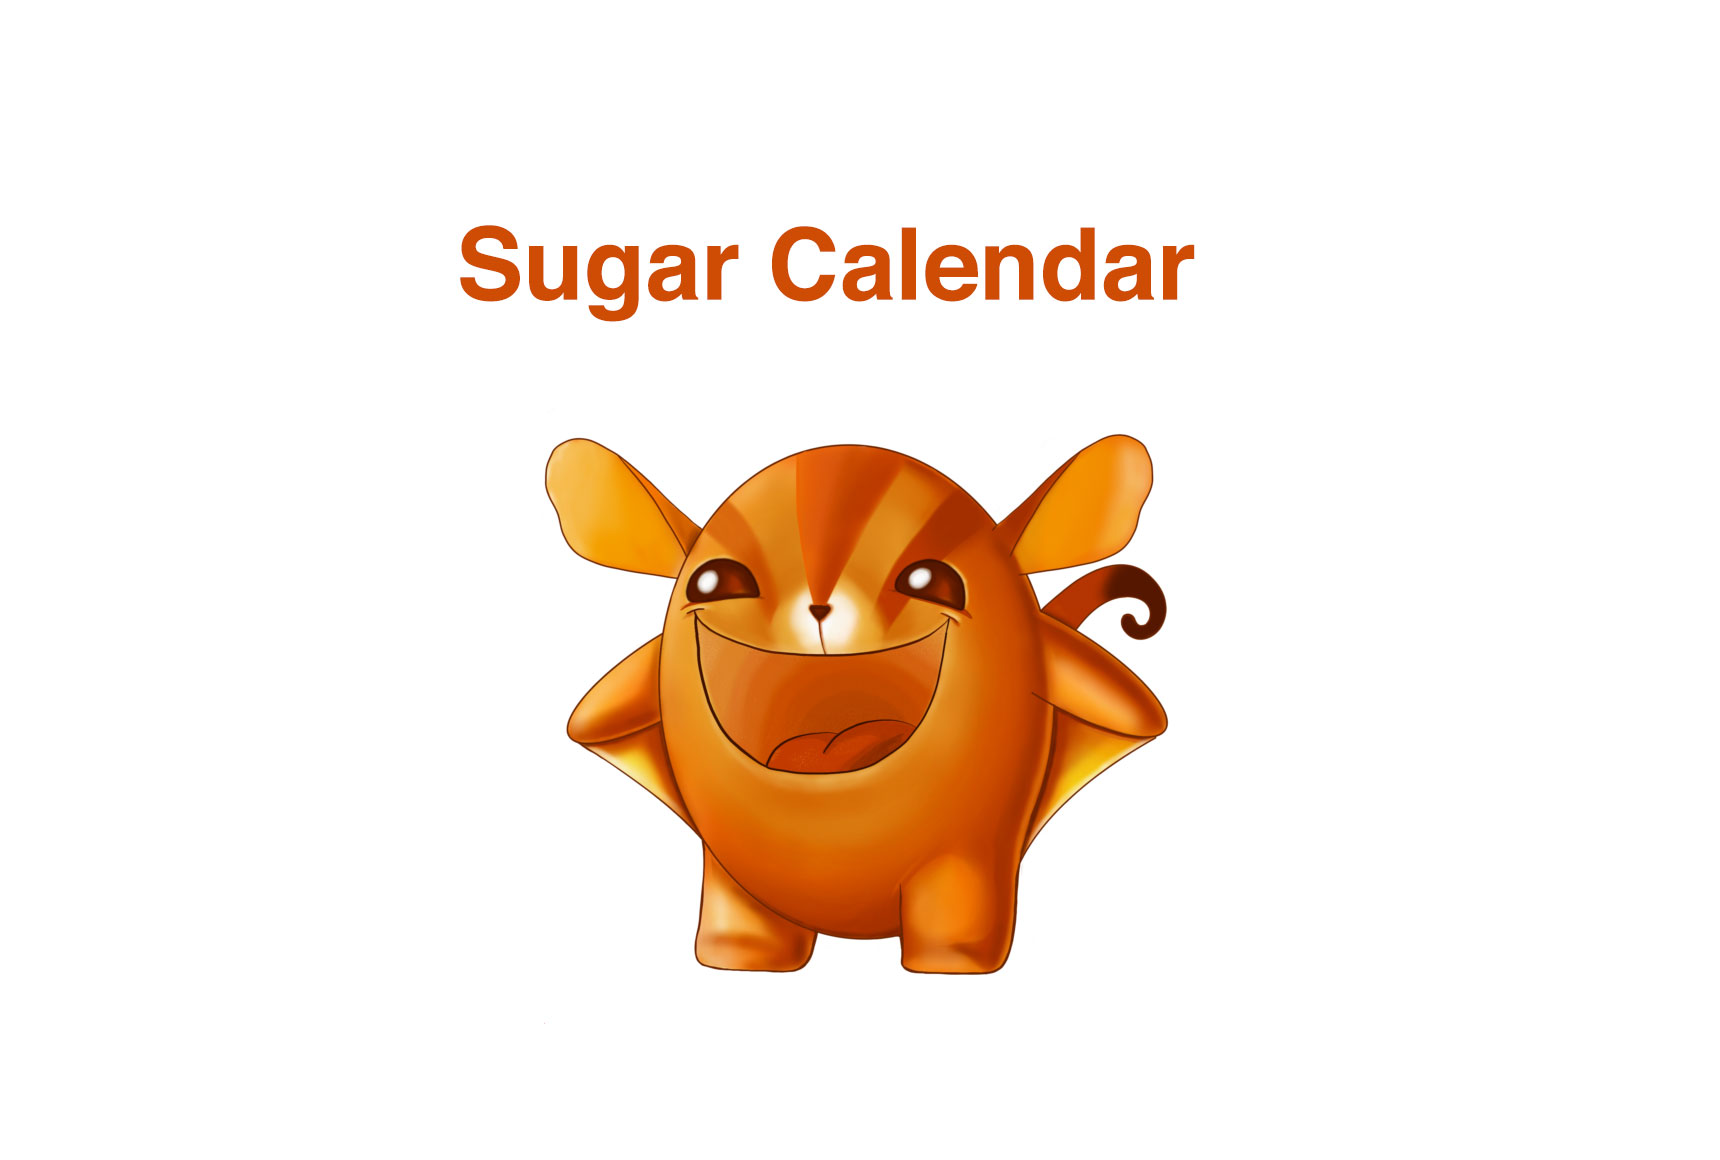 Sugar Calendar masthead image